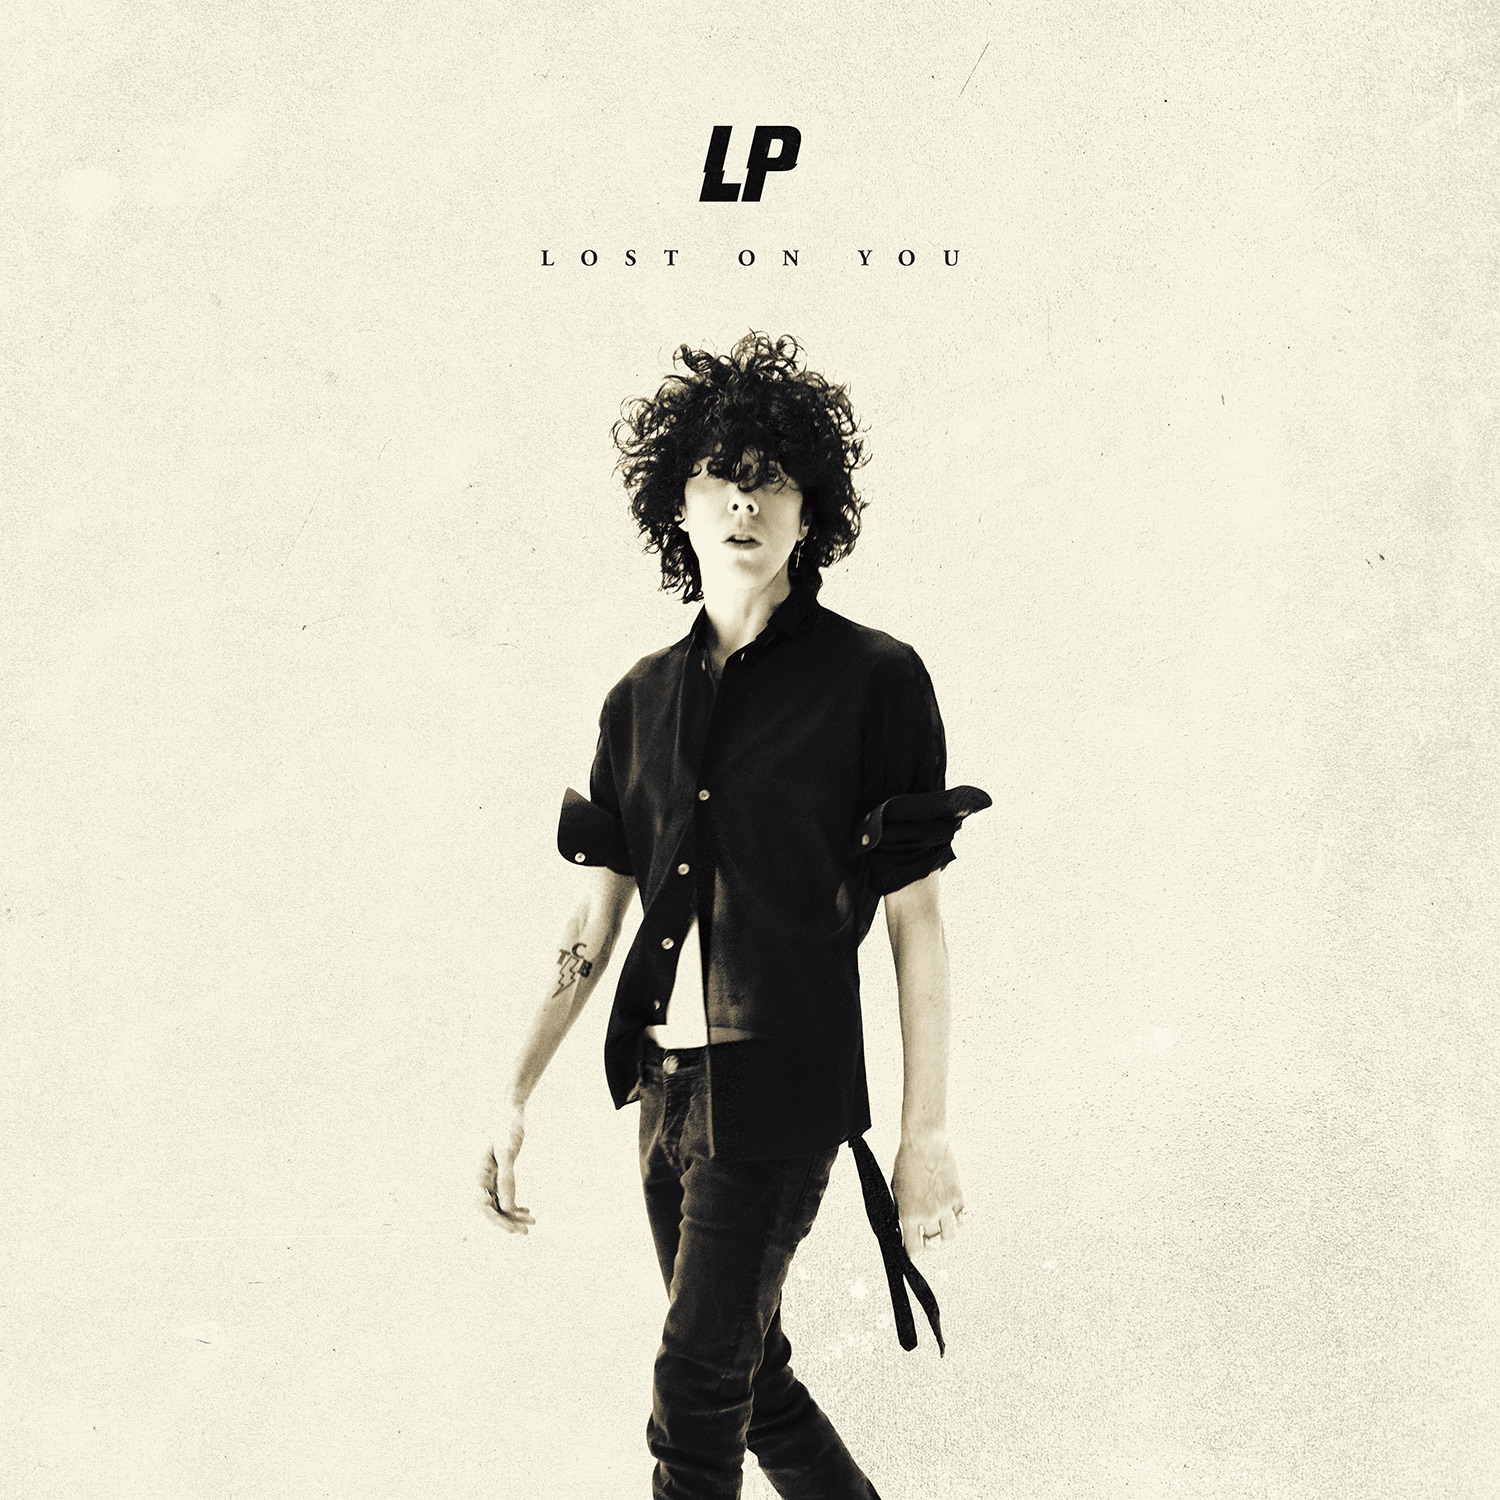 डाउनलोड करा LP - Lost On You